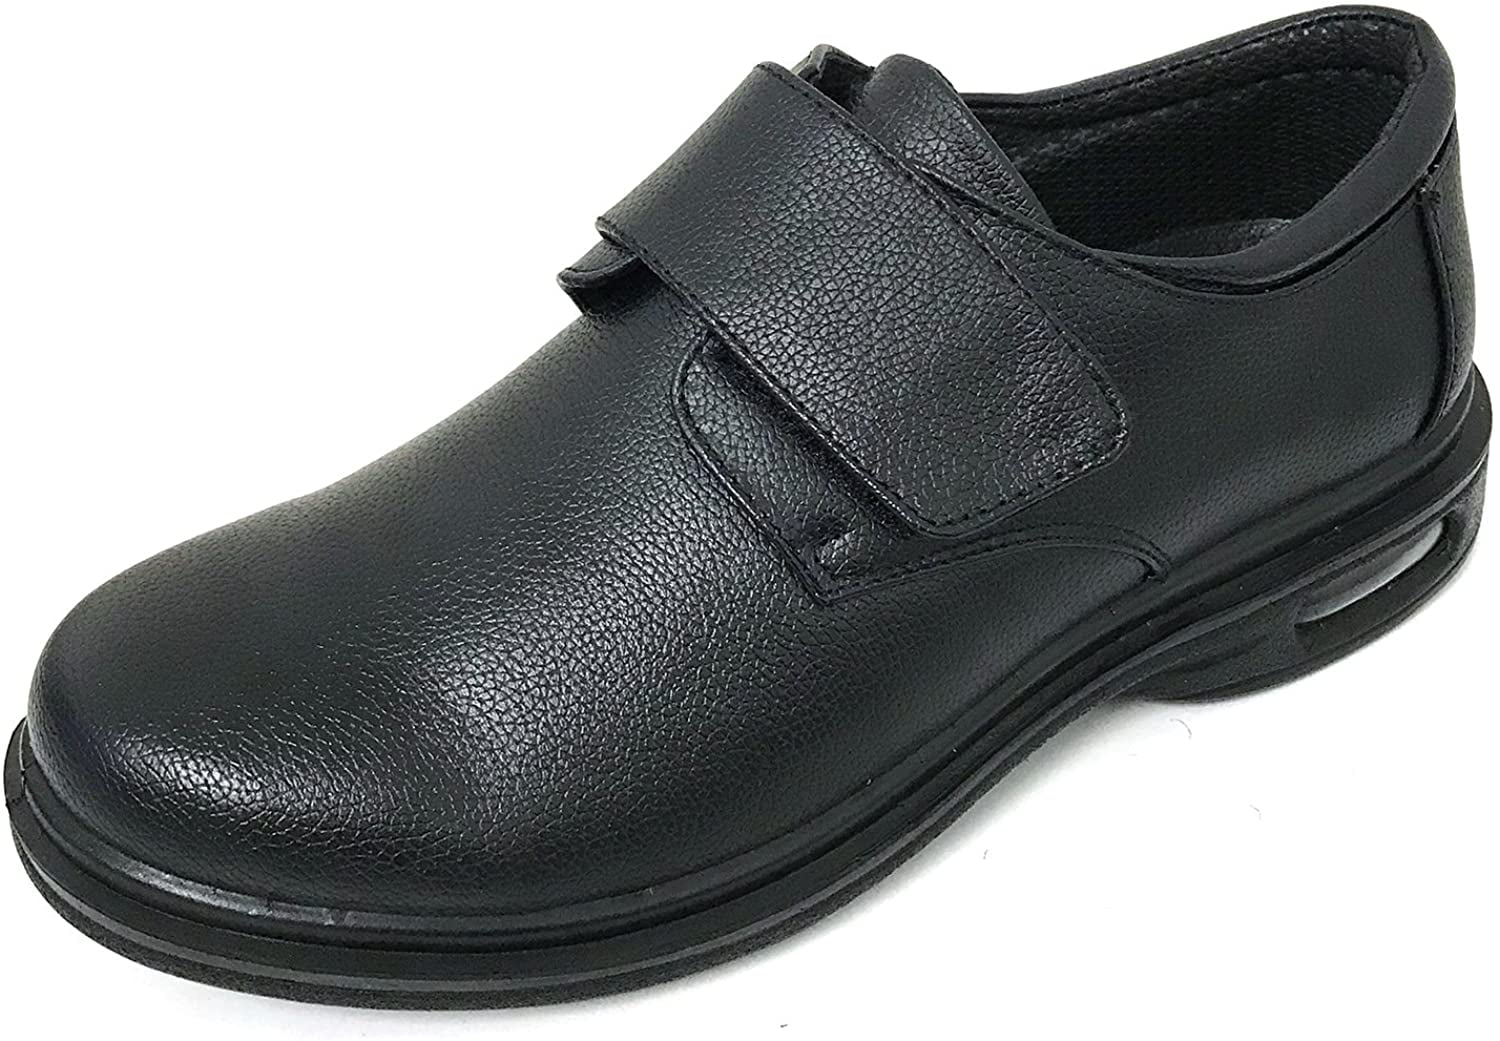 black restaurant work shoes